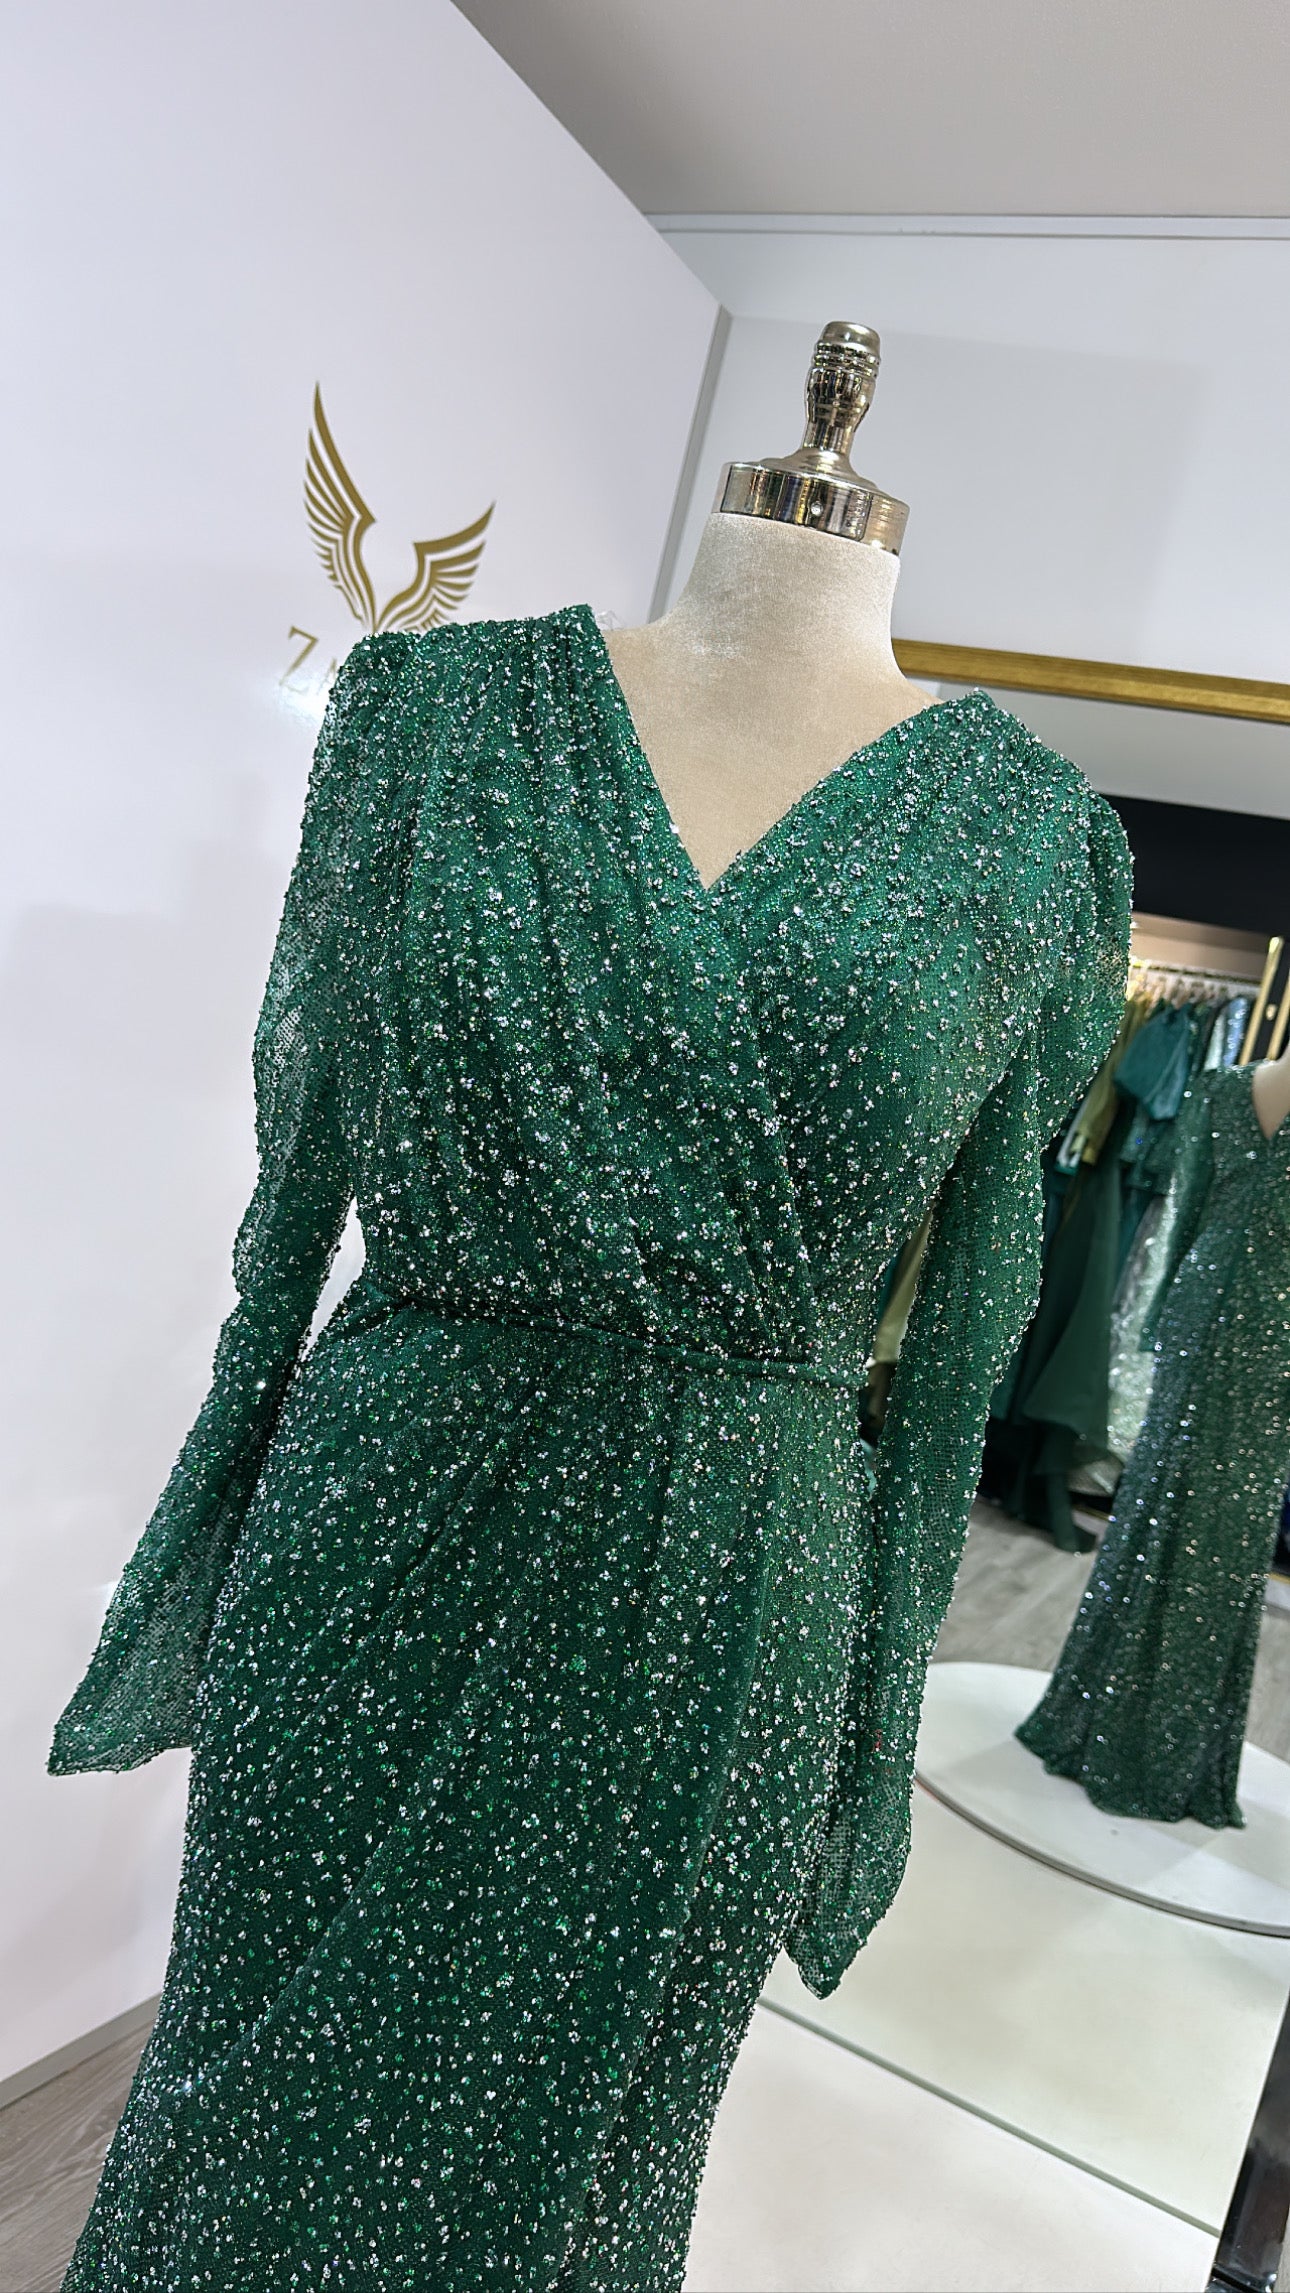 Elegant green dress with beads, slit